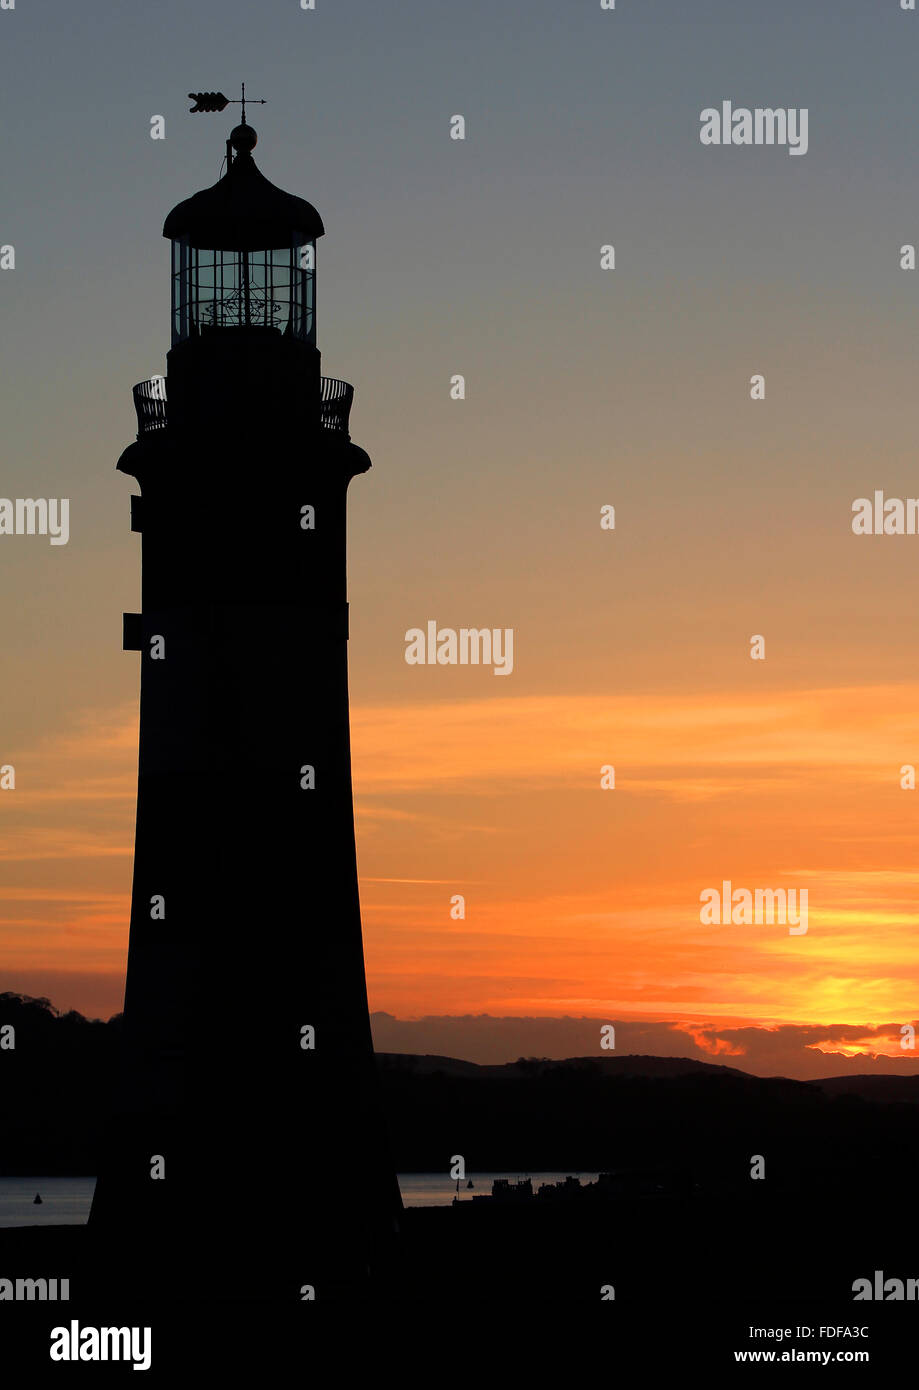 Smeaton's Tower Sunset Silhoette Plymouth Hoe, Devon, UK Banque D'Images